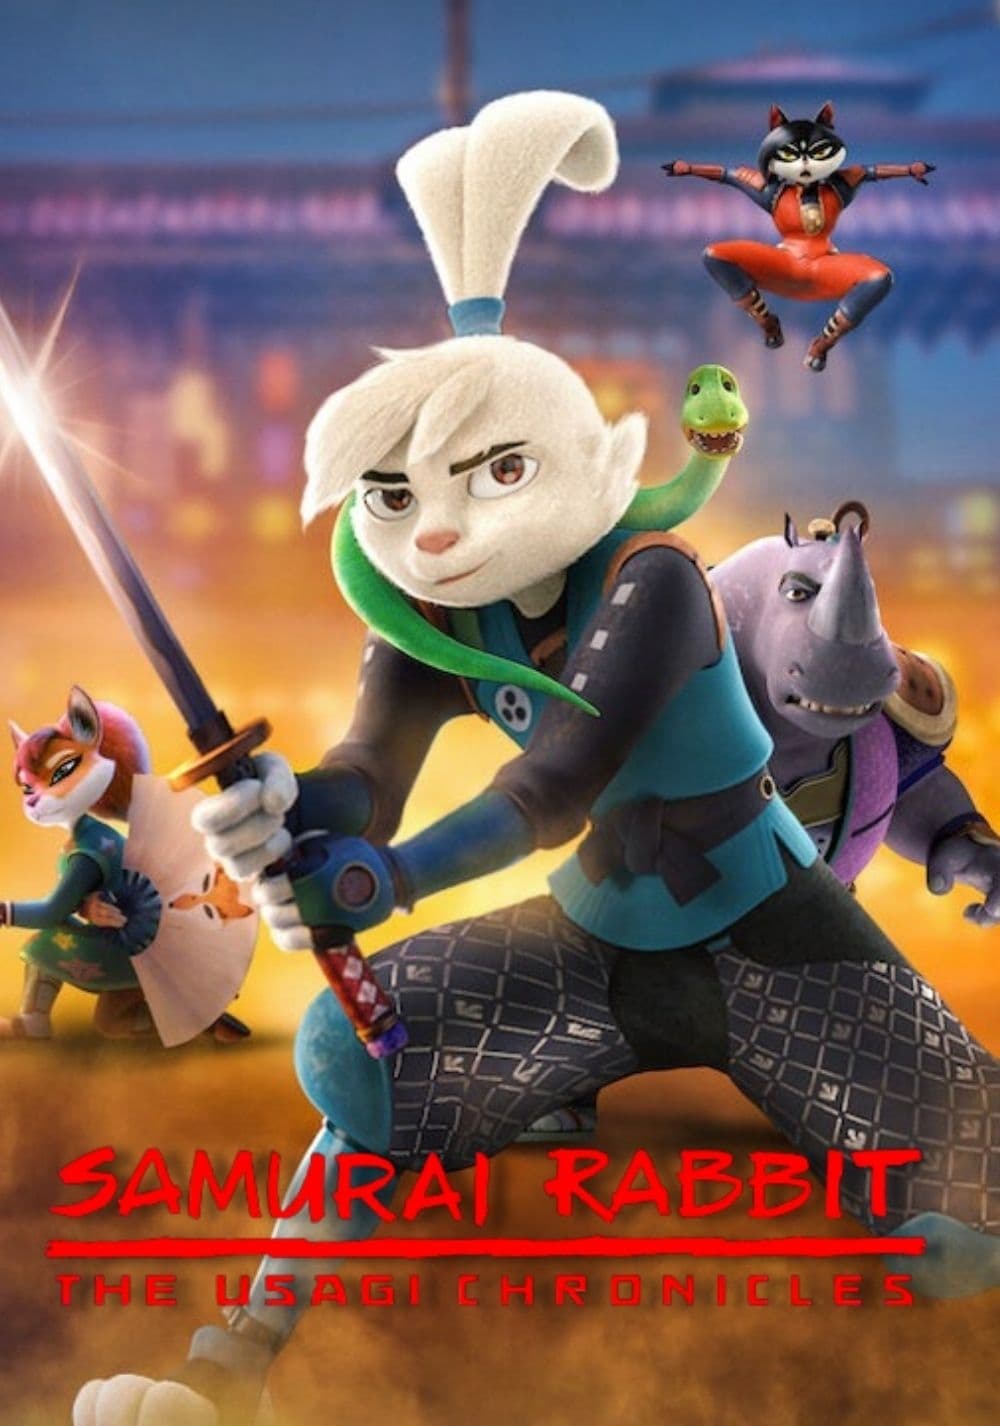 Samurai Rabbit: The Usagi Chronicles TV Shows About Feud